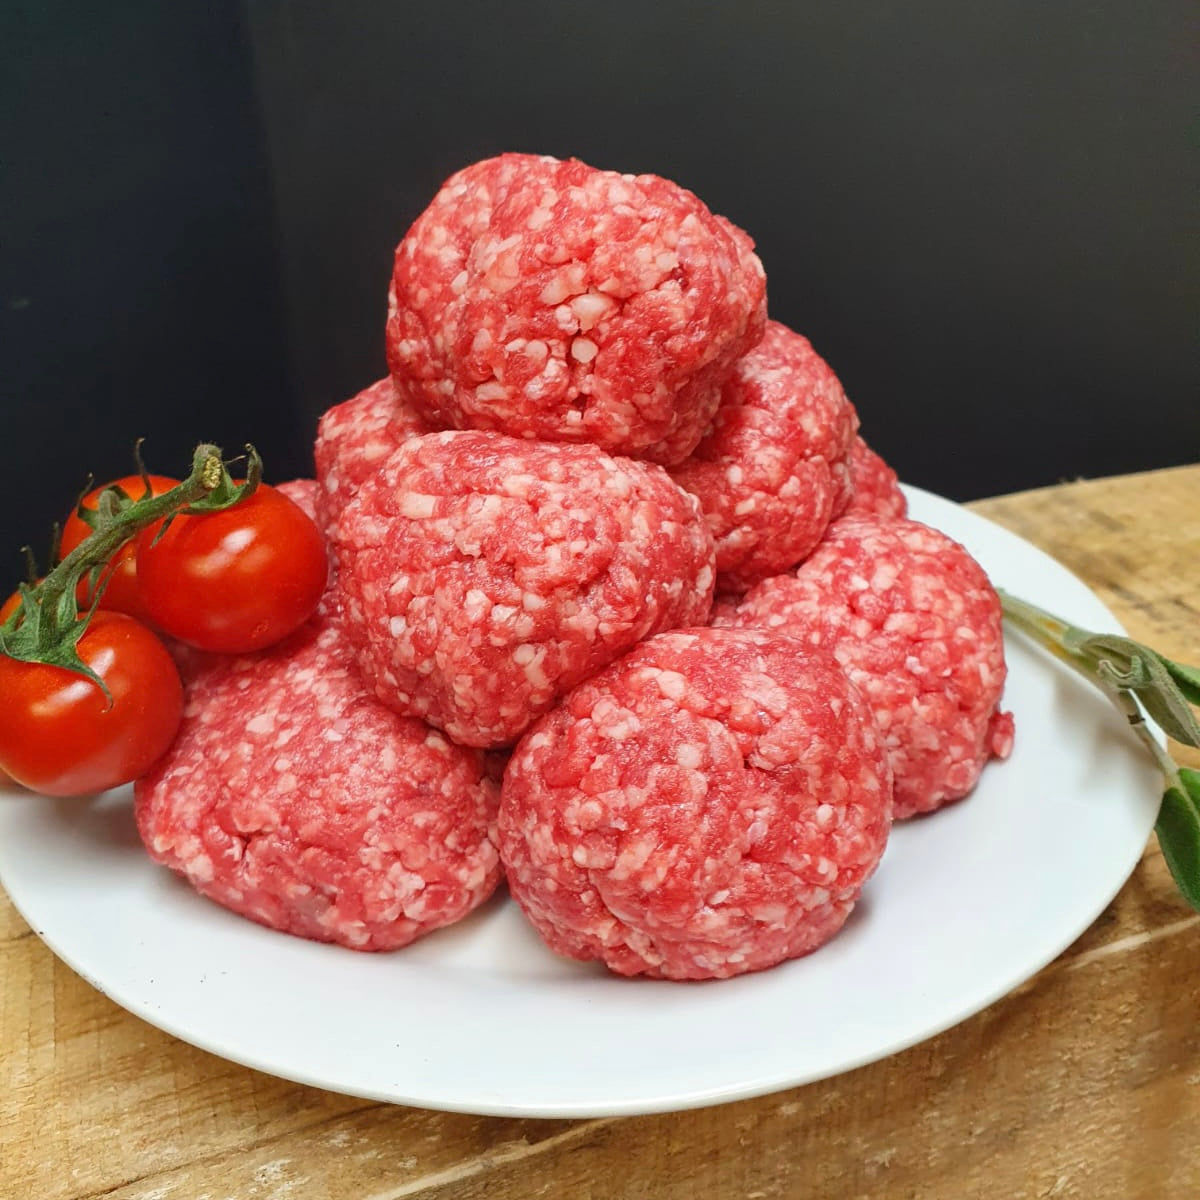 10 x 58 gram Prime British Beef Minced Meat Balls